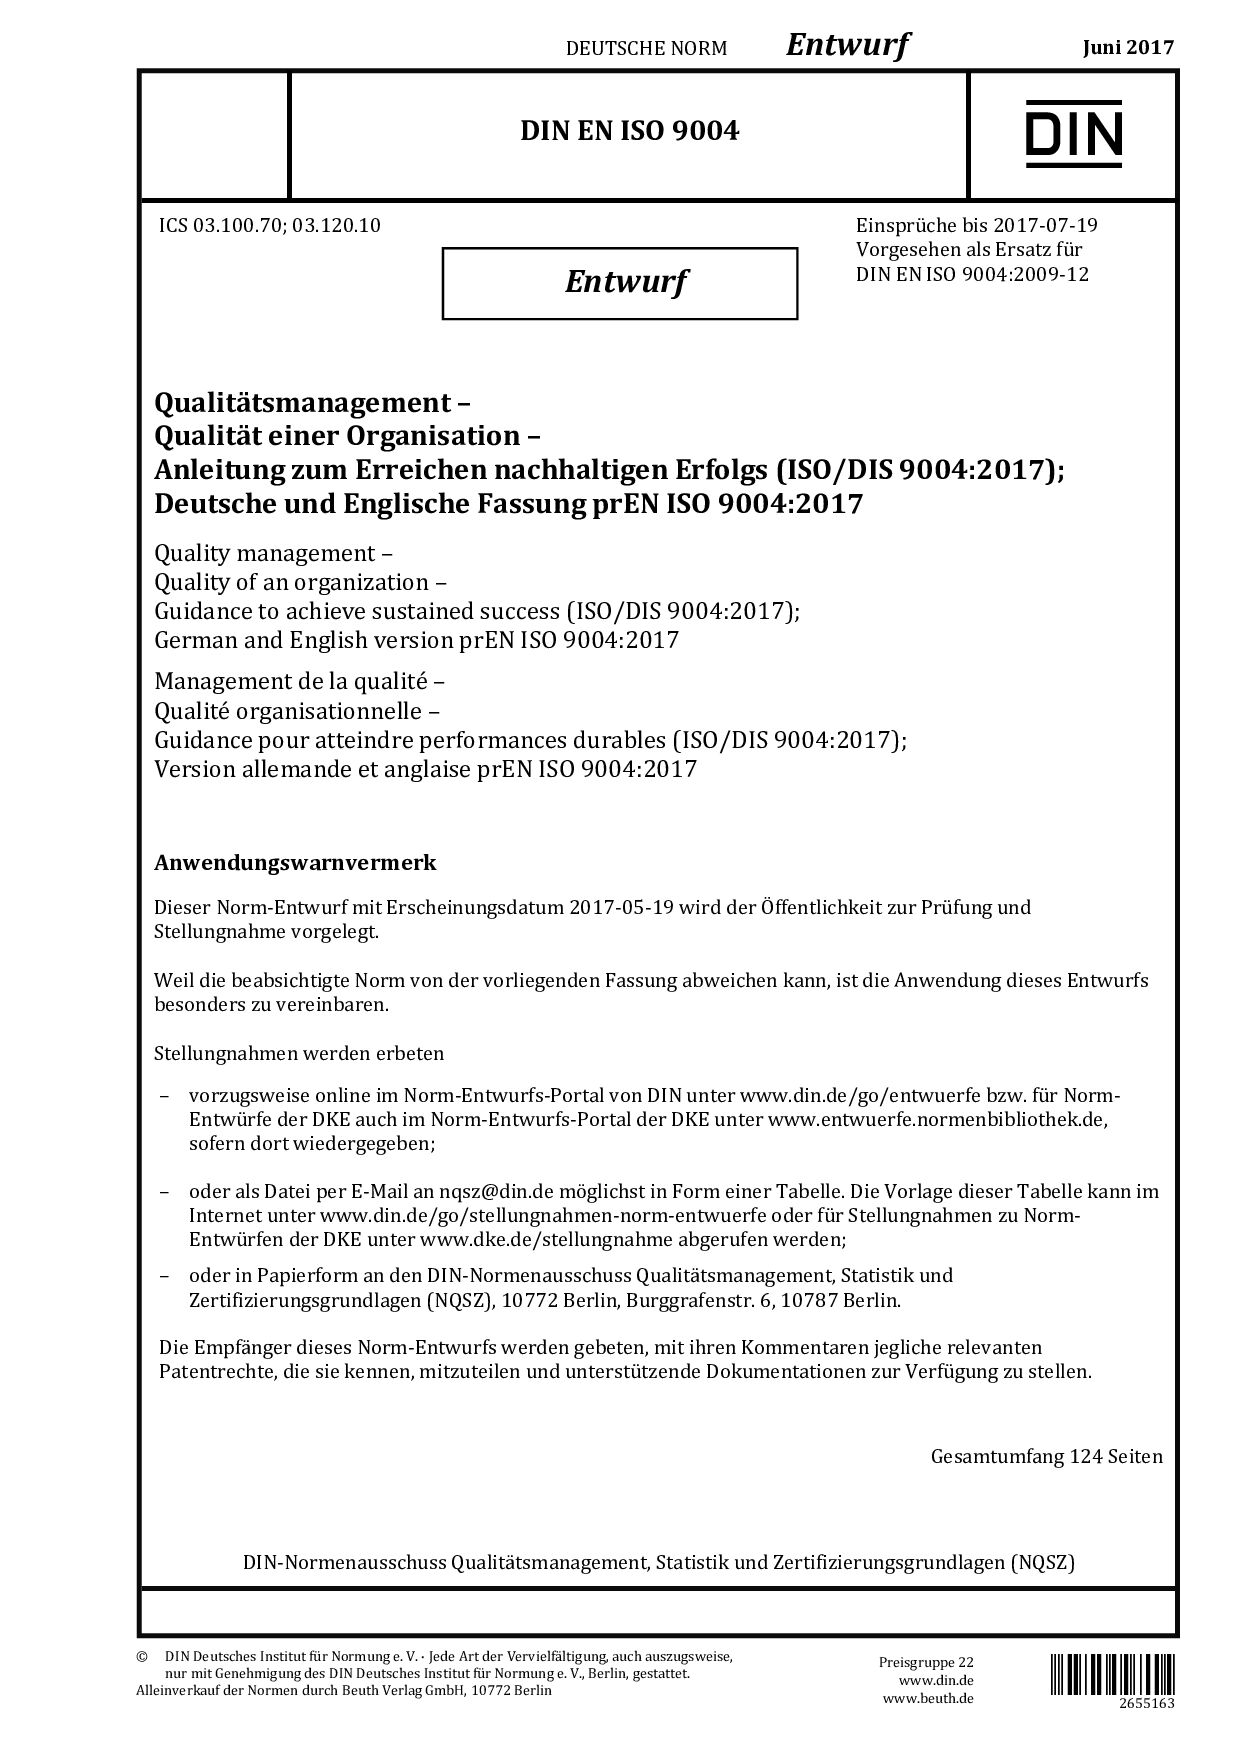 DIN EN ISO 9004 E:2017-06